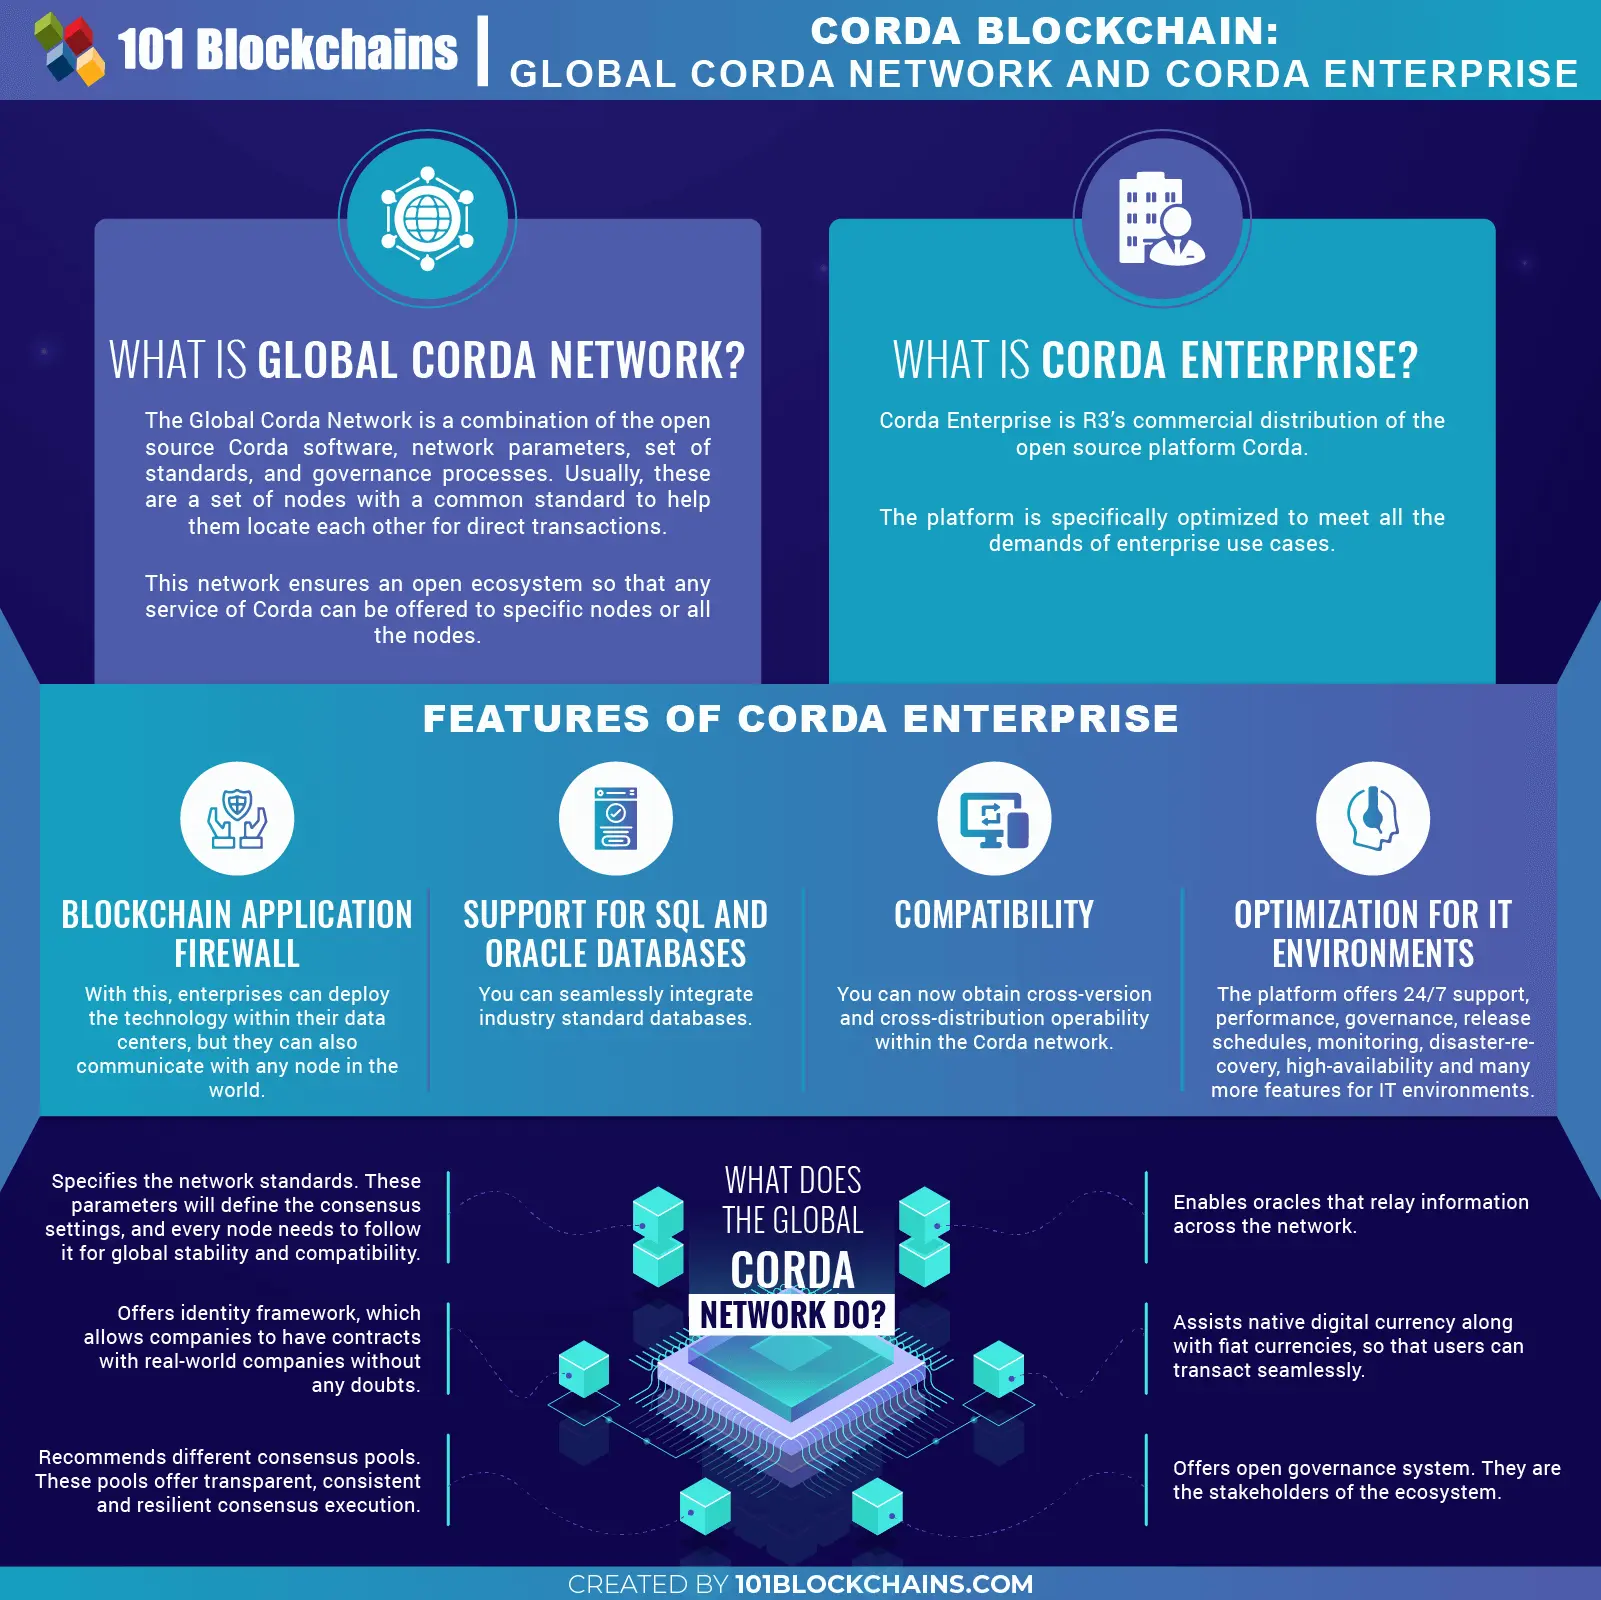 Corda Blockchain: Global Corda Network and Corda Enterprise